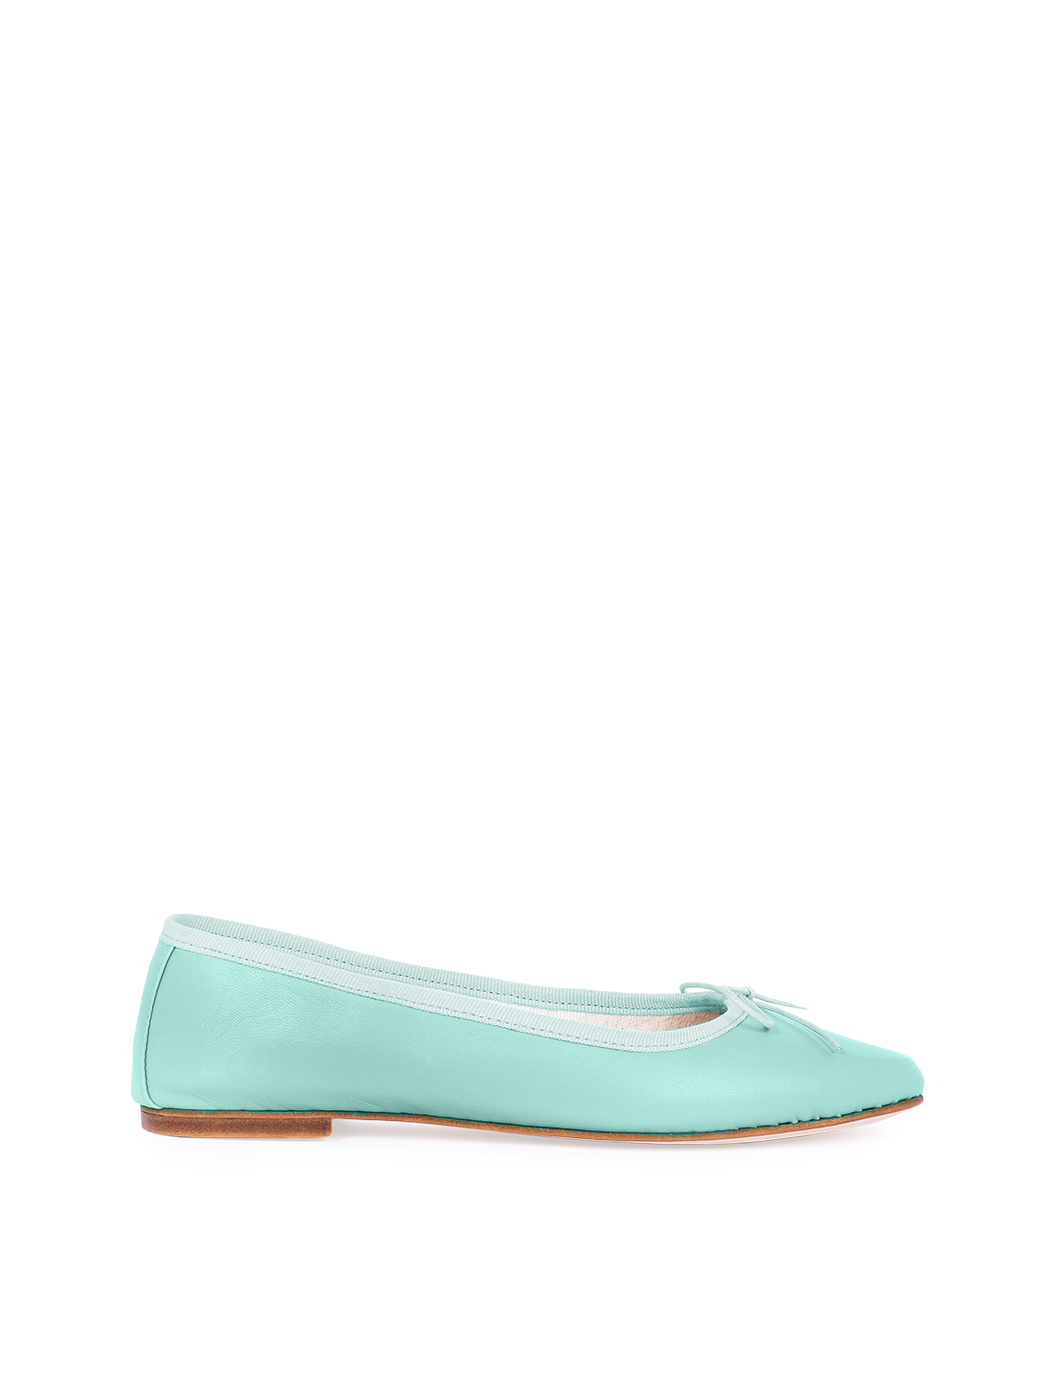 Ballerina Shoes - Turquoise Nappa 